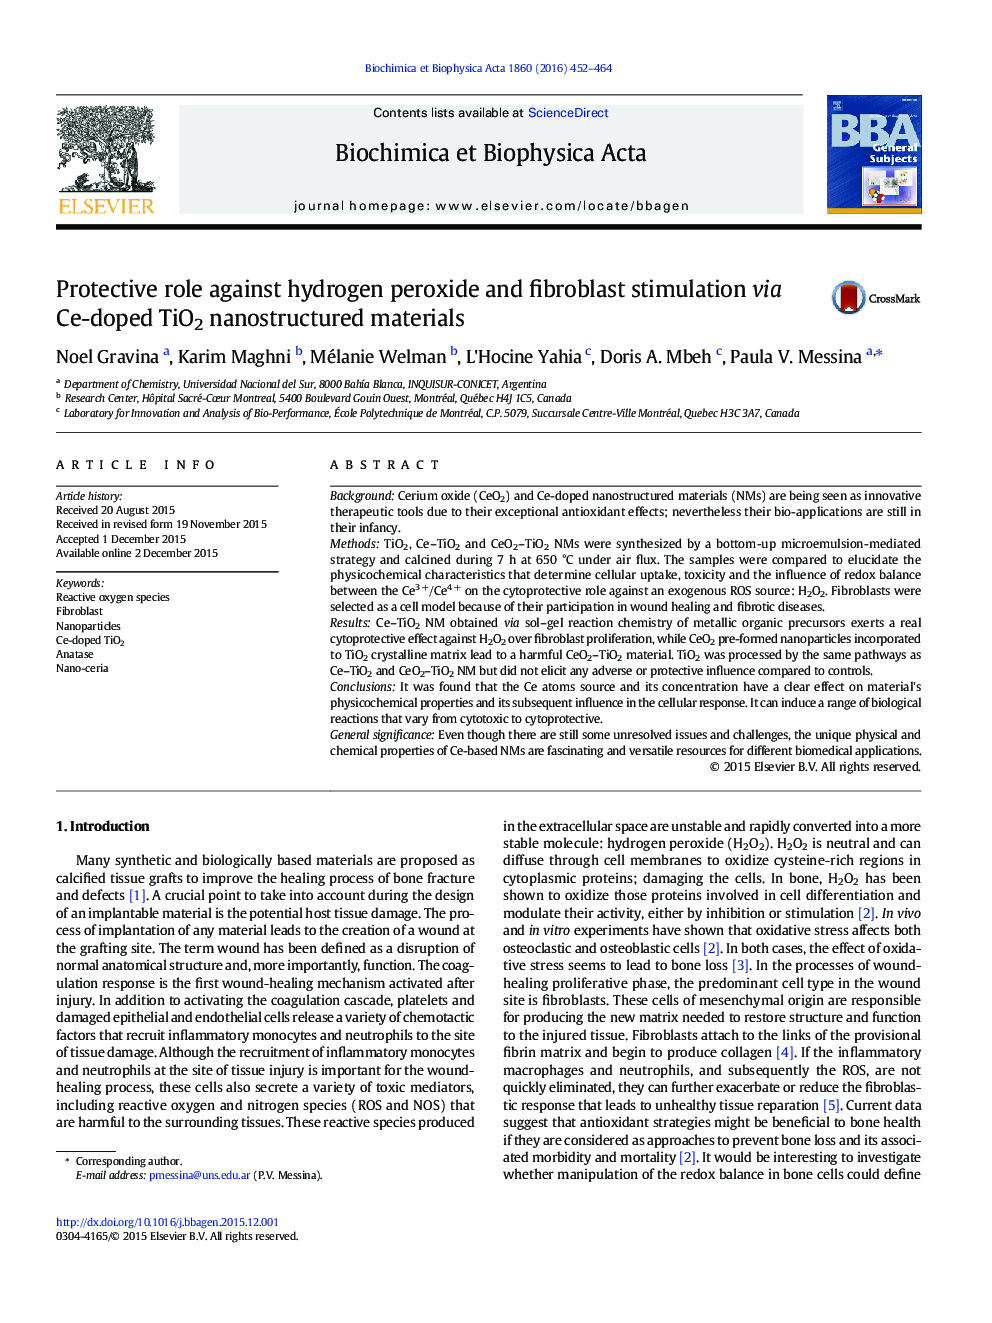 Protective role against hydrogen peroxide and fibroblast stimulation via Ce-doped TiO2 nanostructured materials